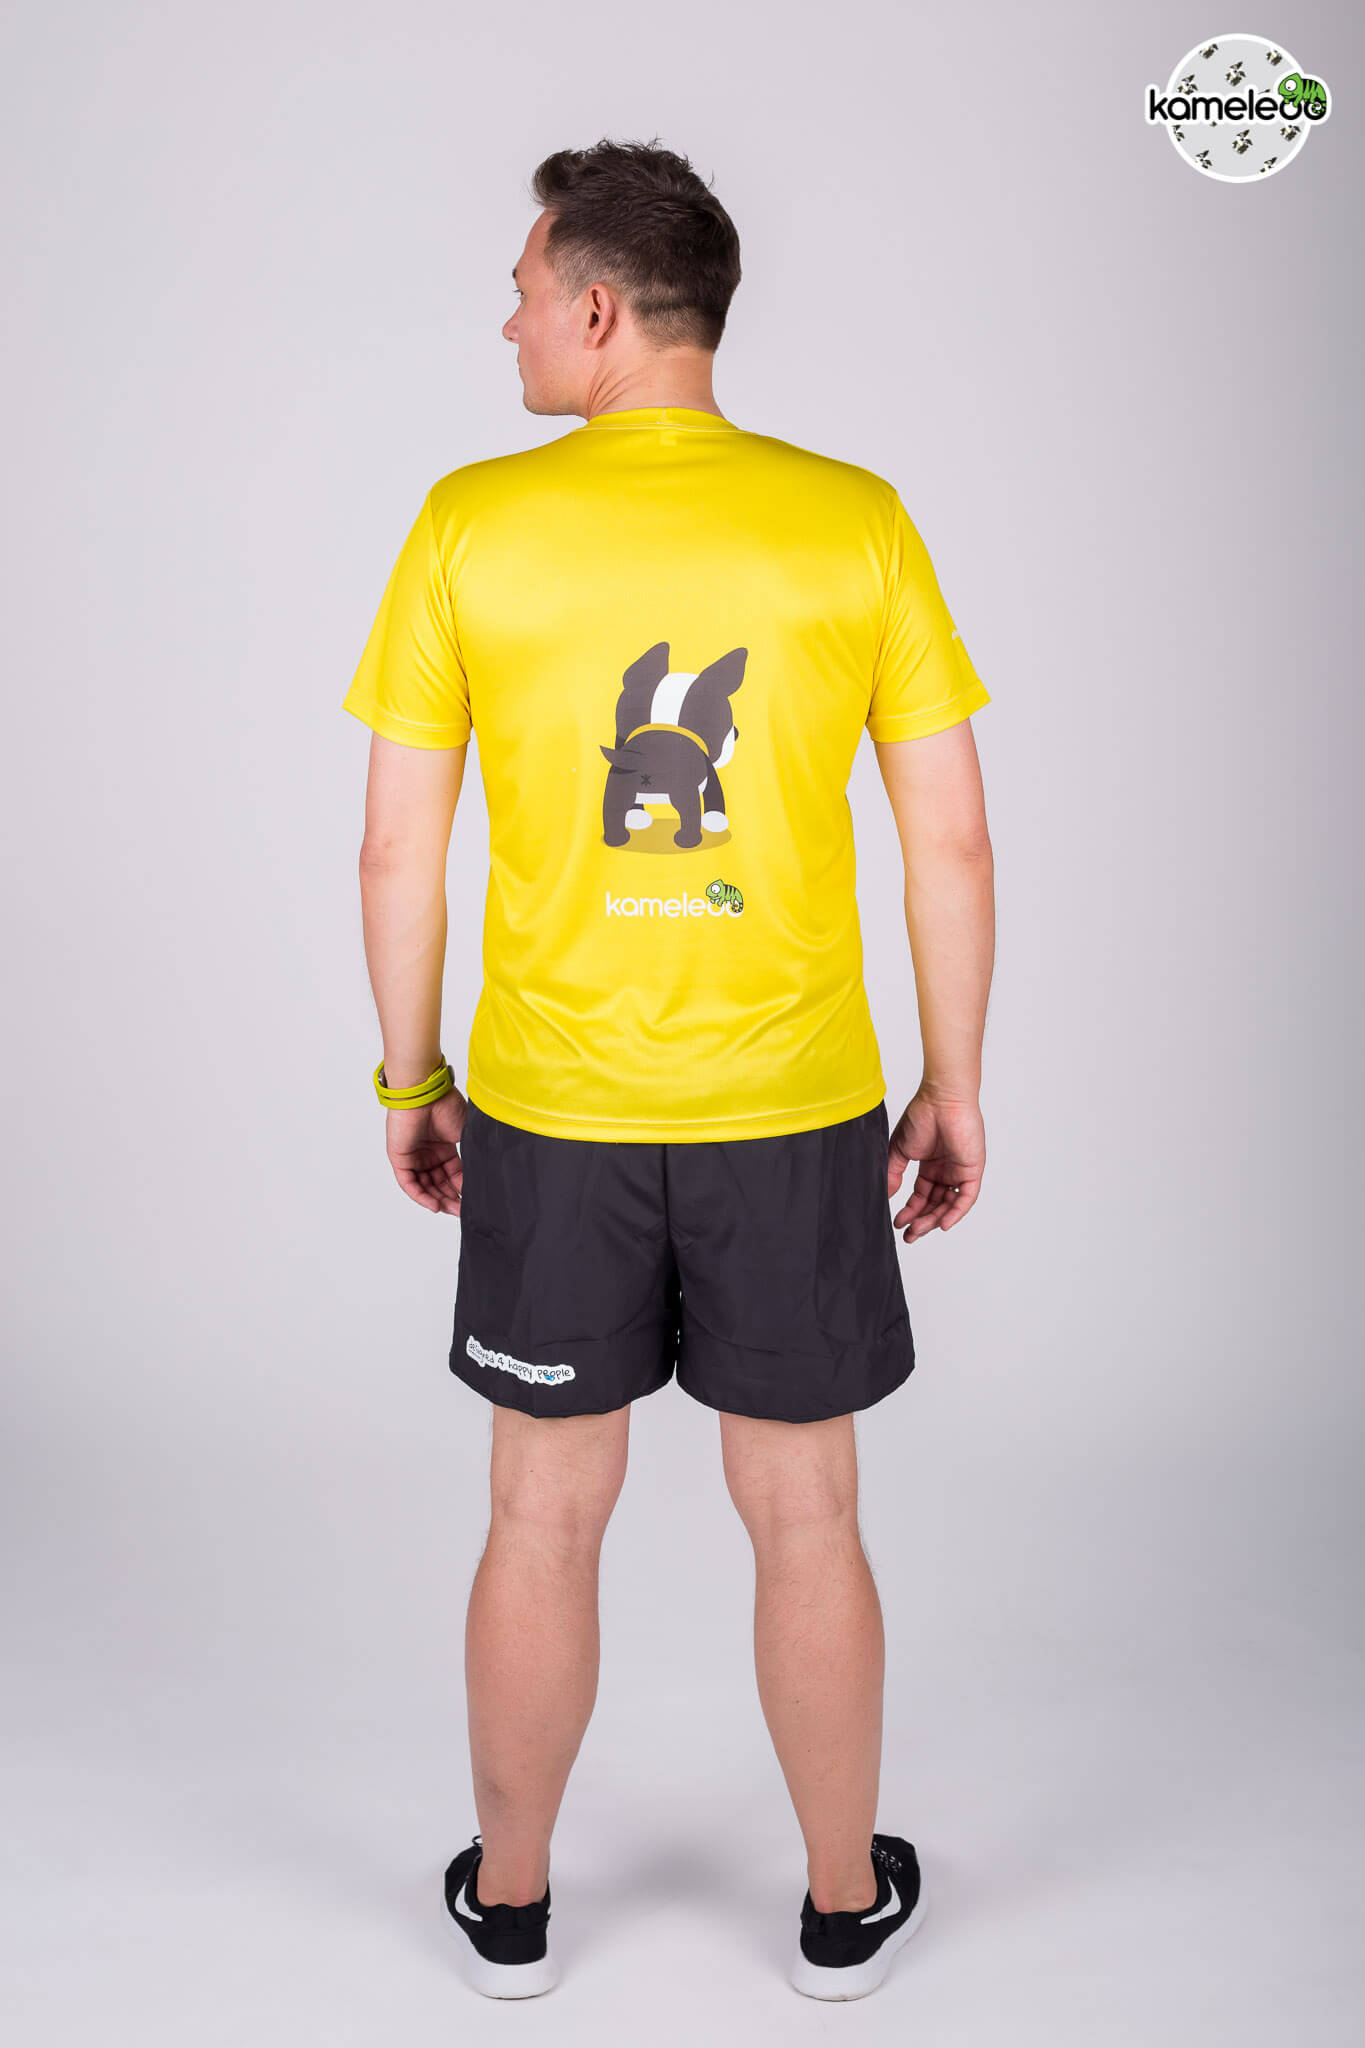 Bostoon Men's T-Shirt - Yellow - Kameleoo.com